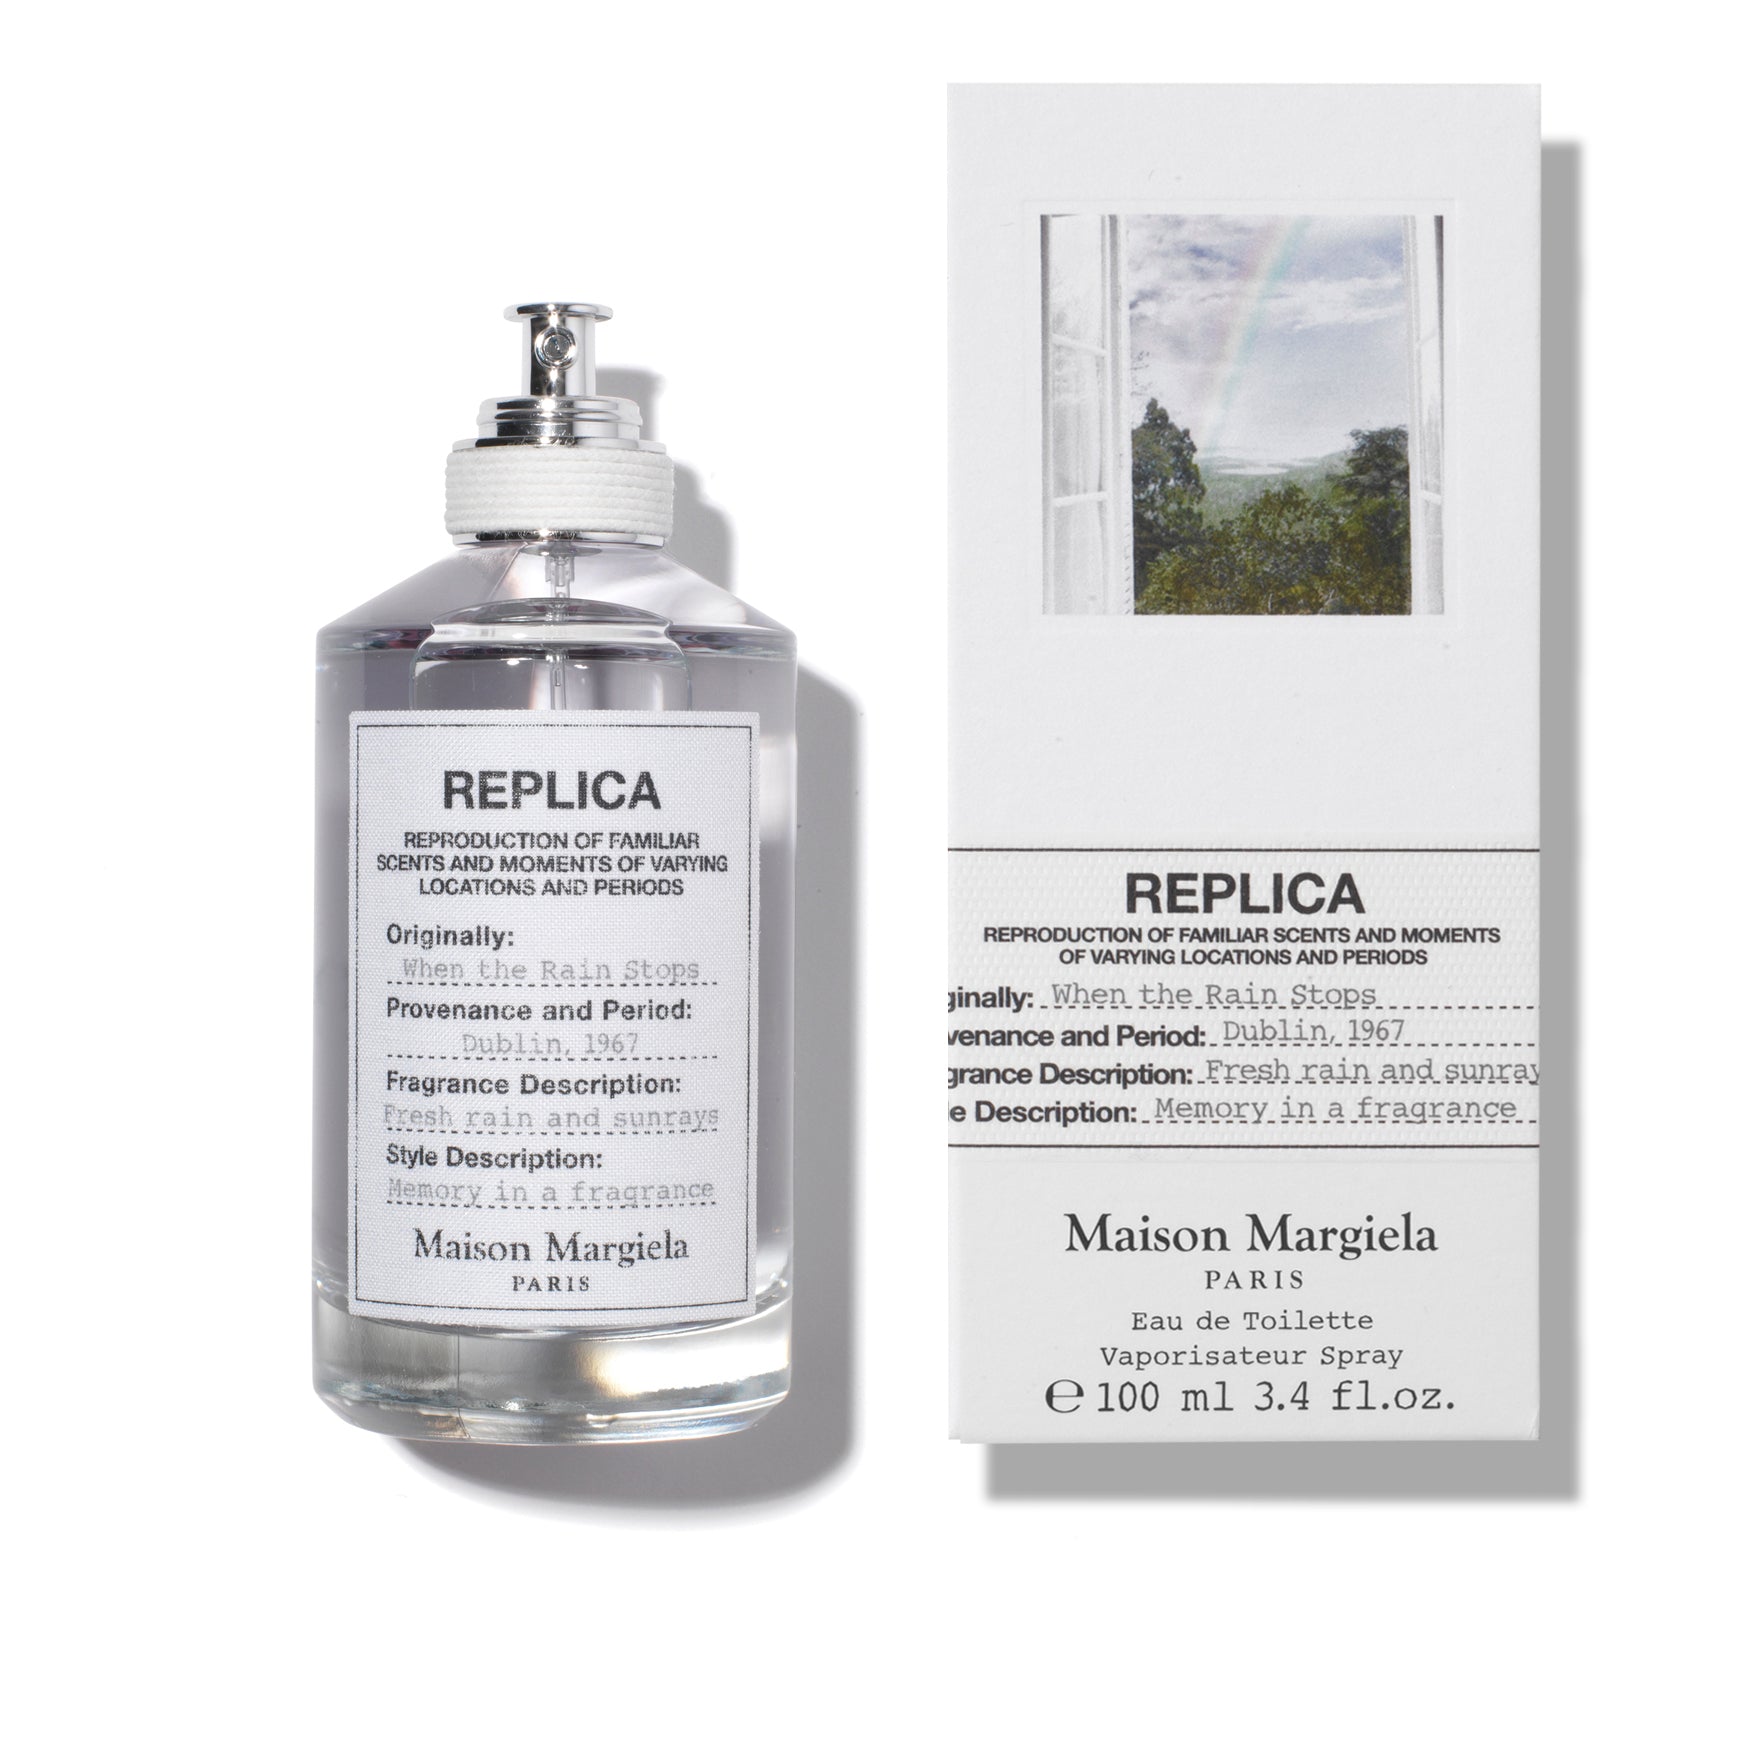 Maison Margiela Replica When The Rain Stops EDT | My Perfume Shop Australia